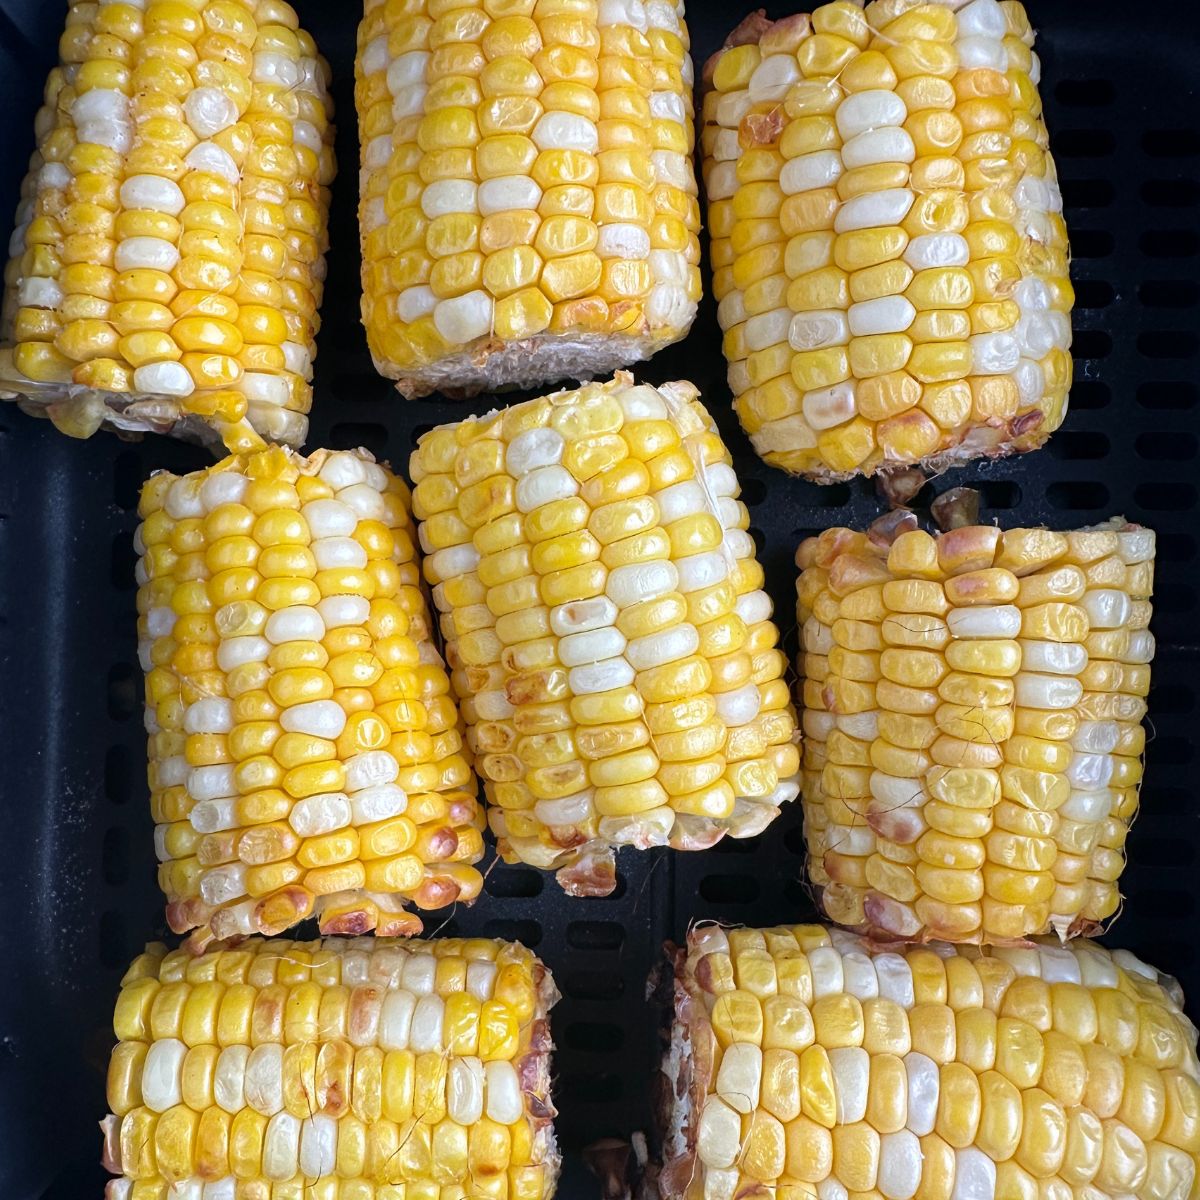 Corn in air fryer basket.